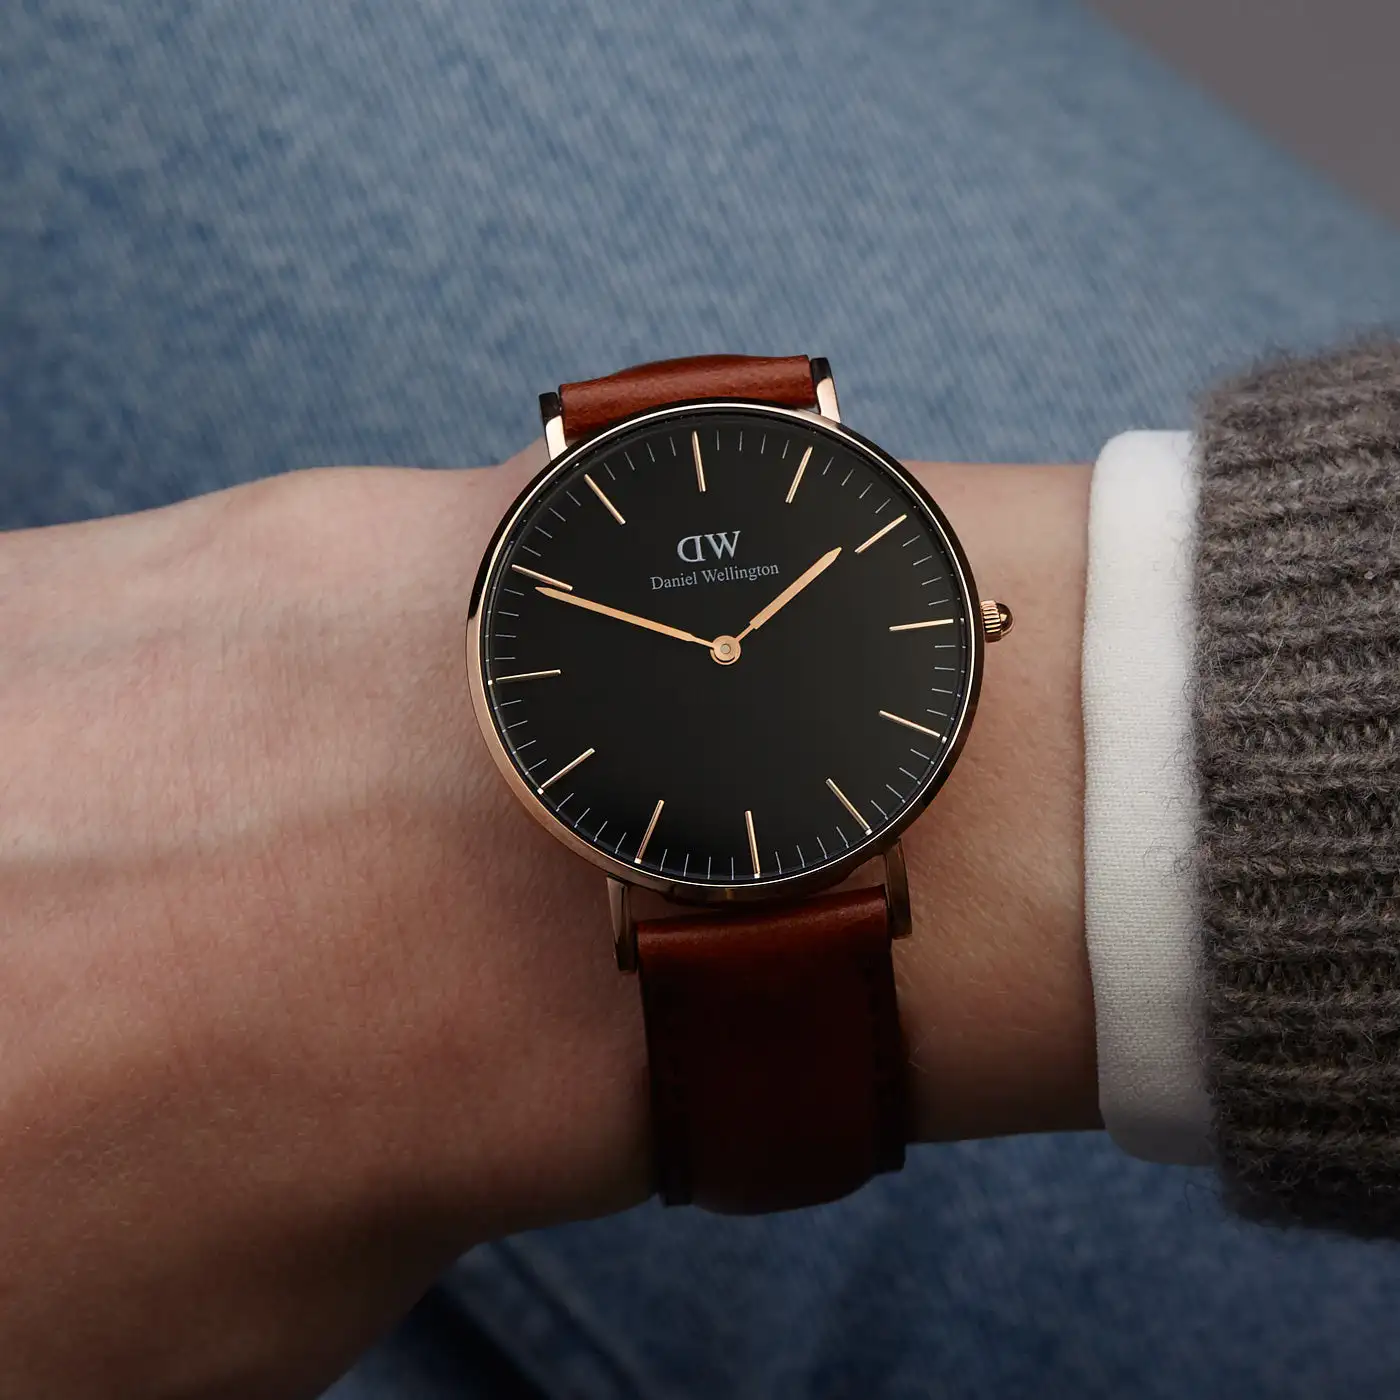 Wrist watch black with brown strap